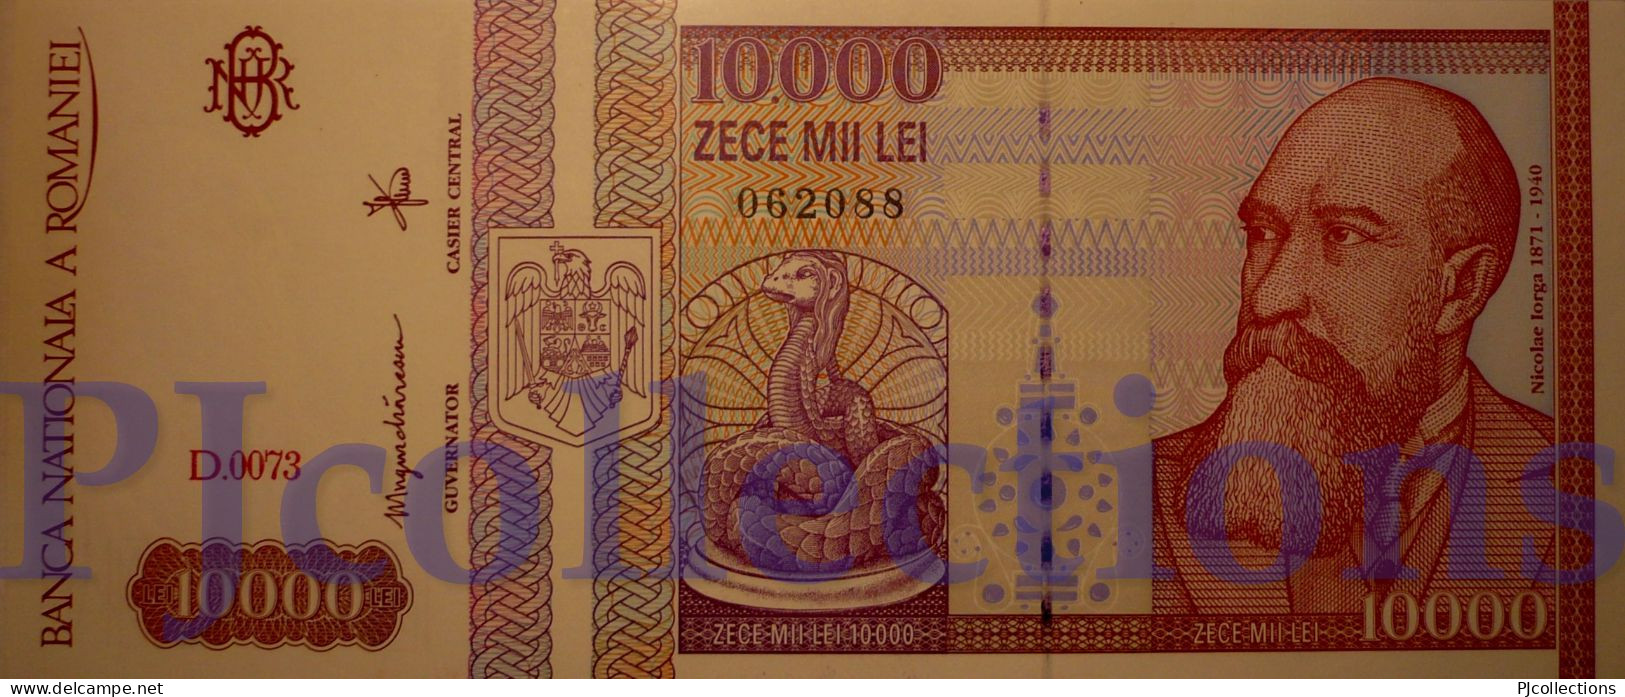 ROMANIA 10000 LEI 1994 PICK 105 UNC - Roumanie